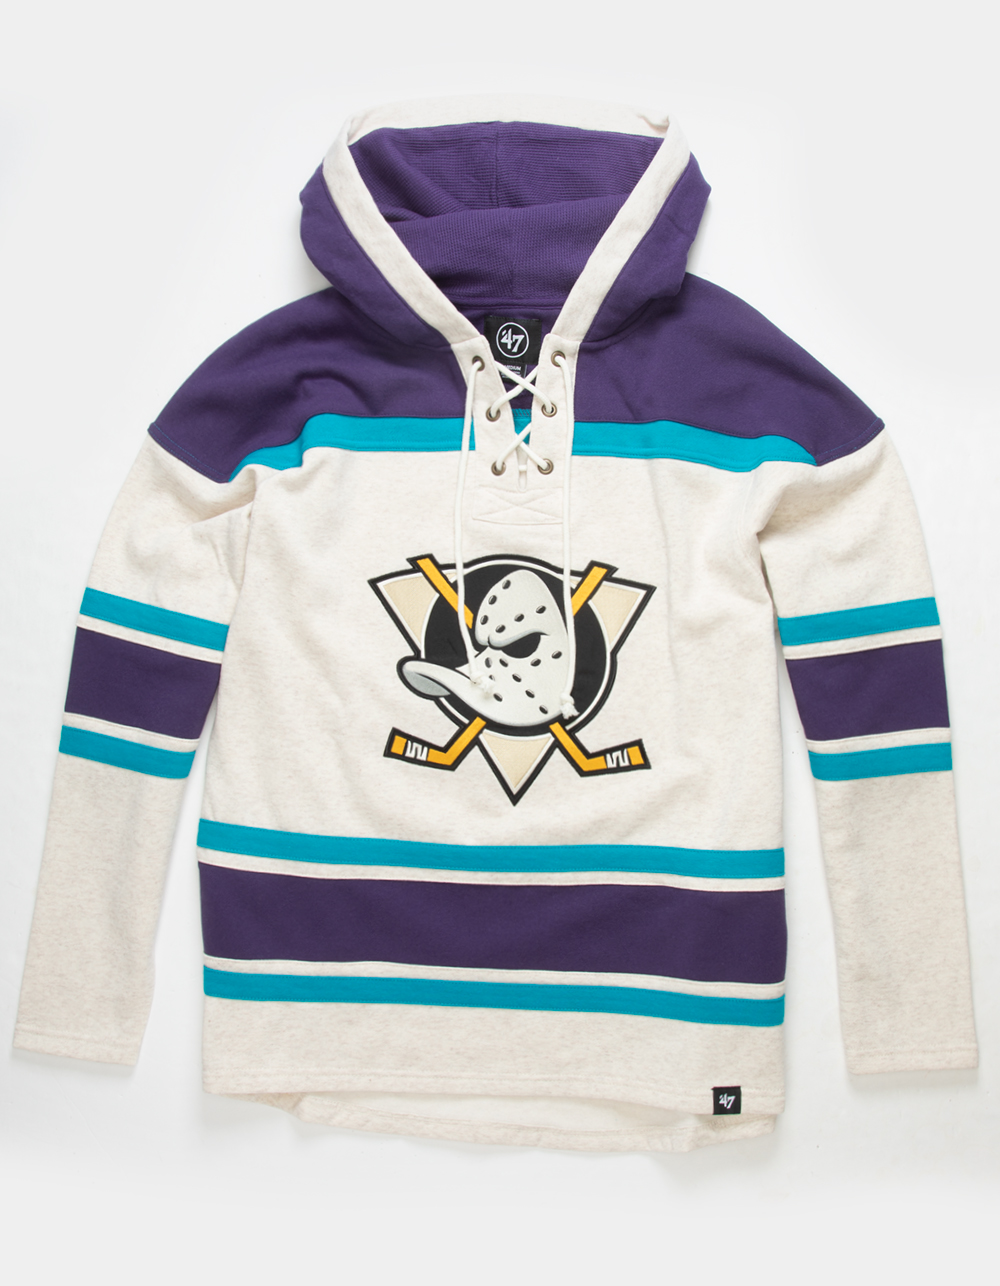 Buy Anaheim Ducks Superior Lacer Hood Jersey Men's Hoodies from